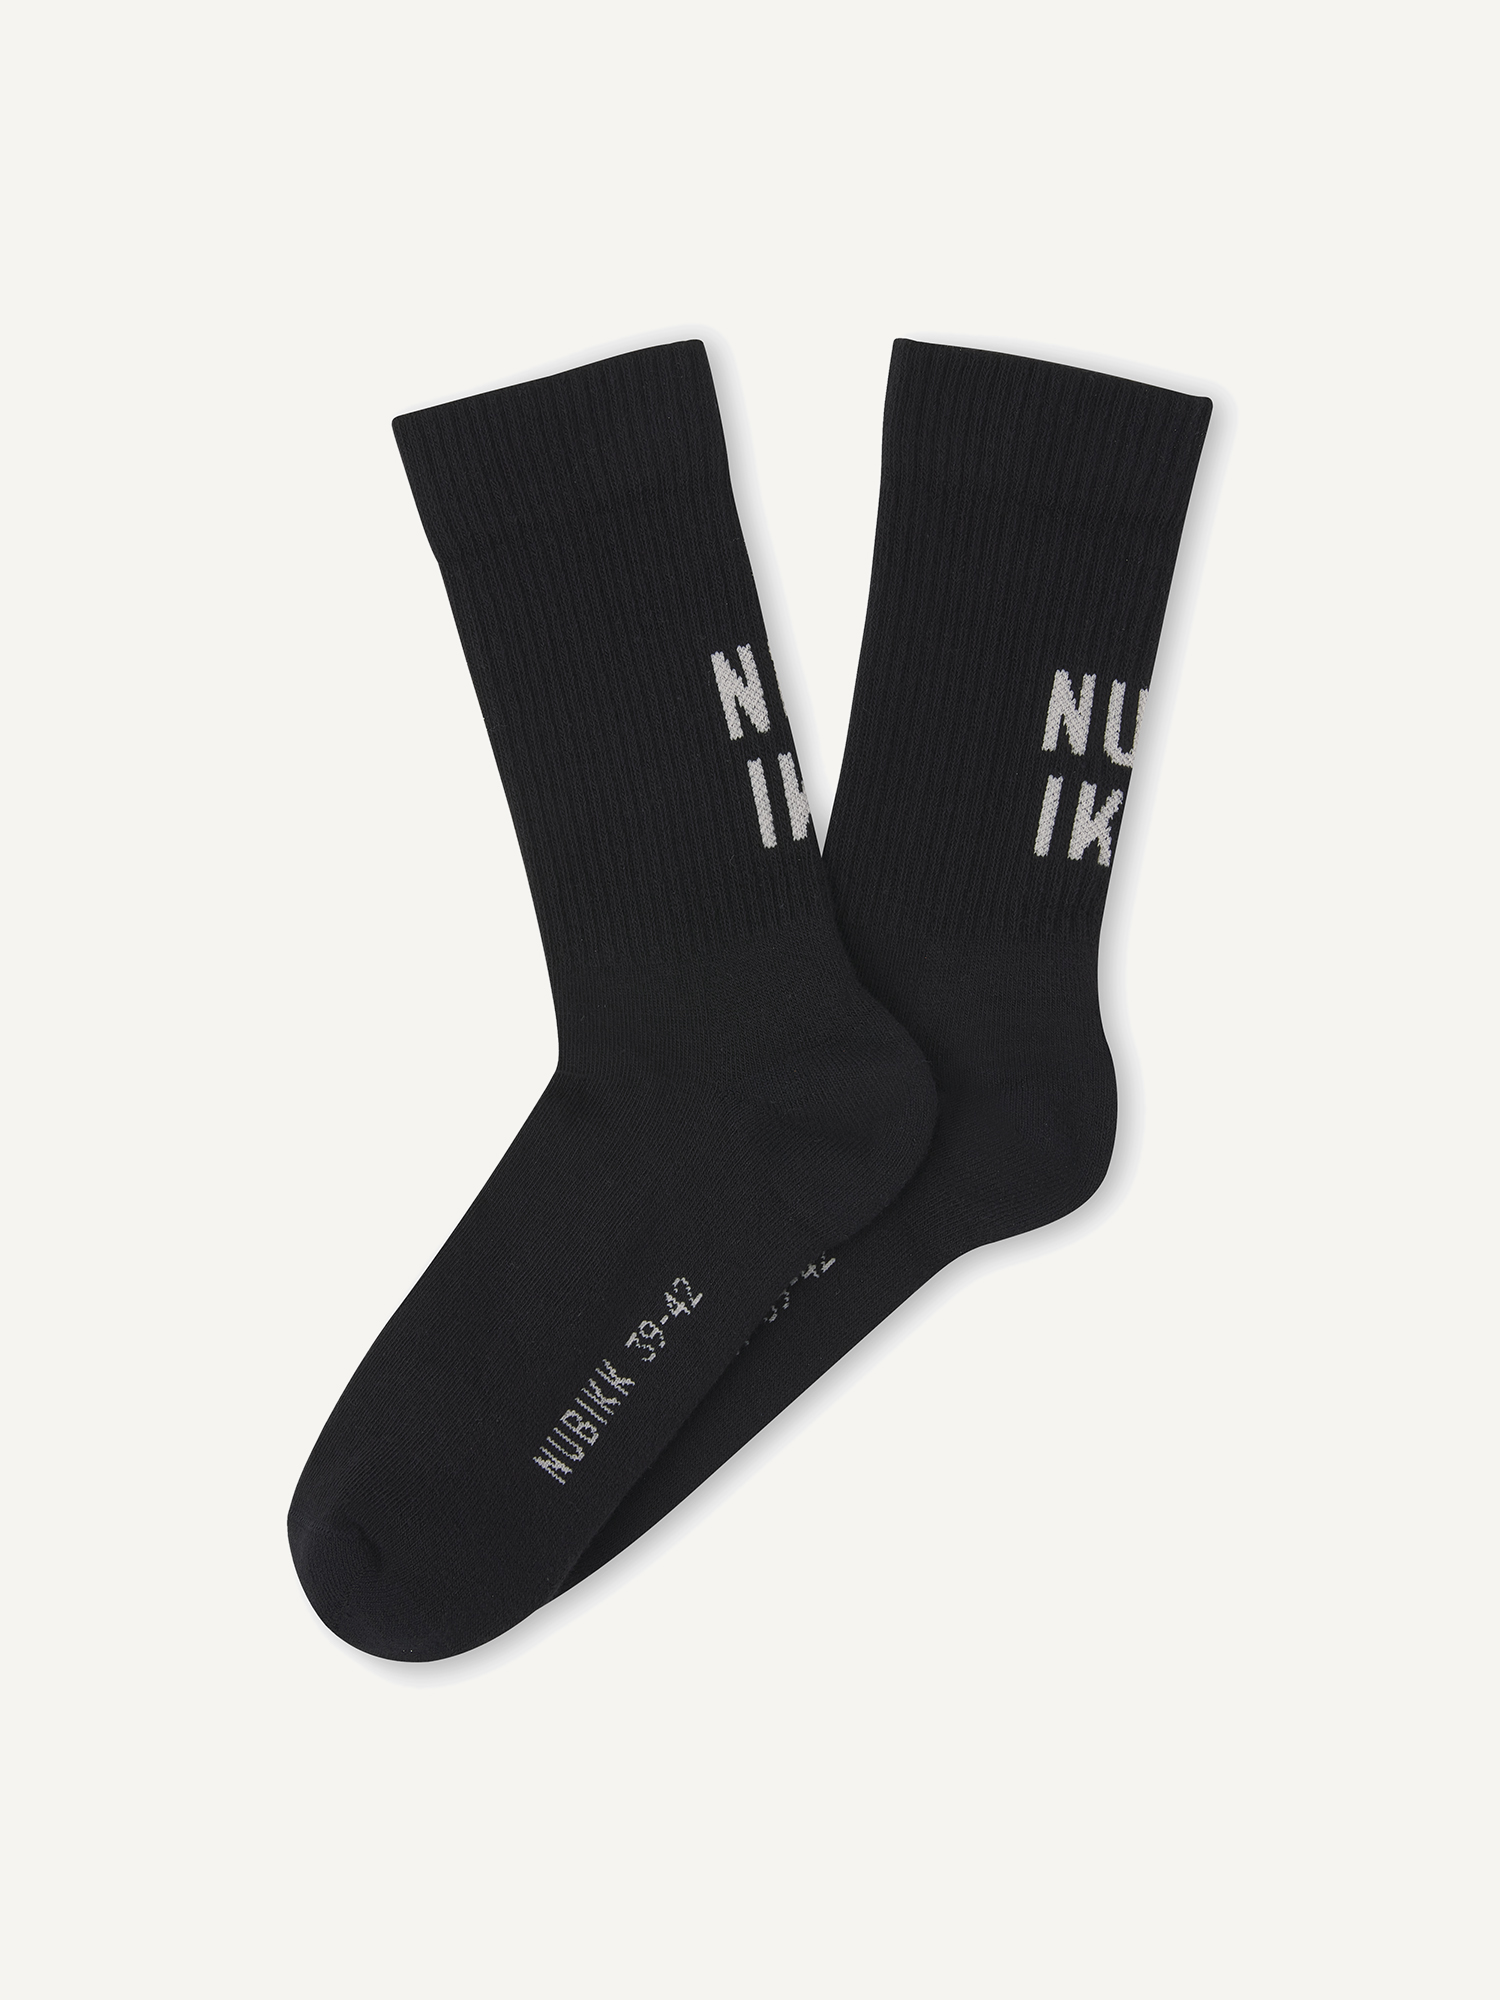 Nova Socks | Black socks for men